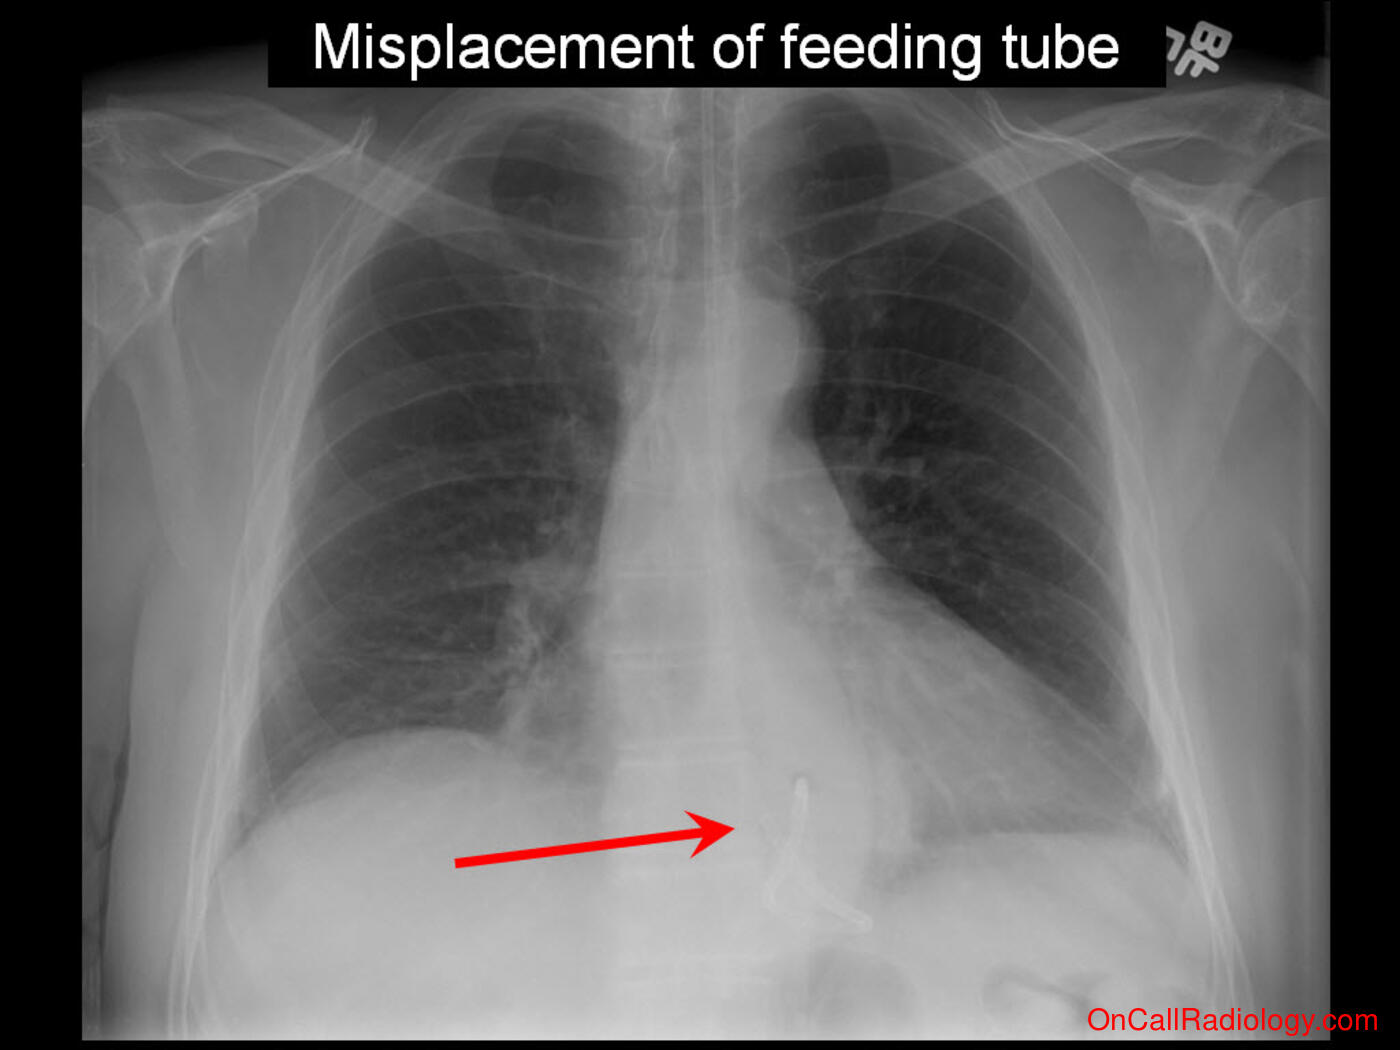 Devices (Misplaced feeding tube - Plain film, Radiograph)